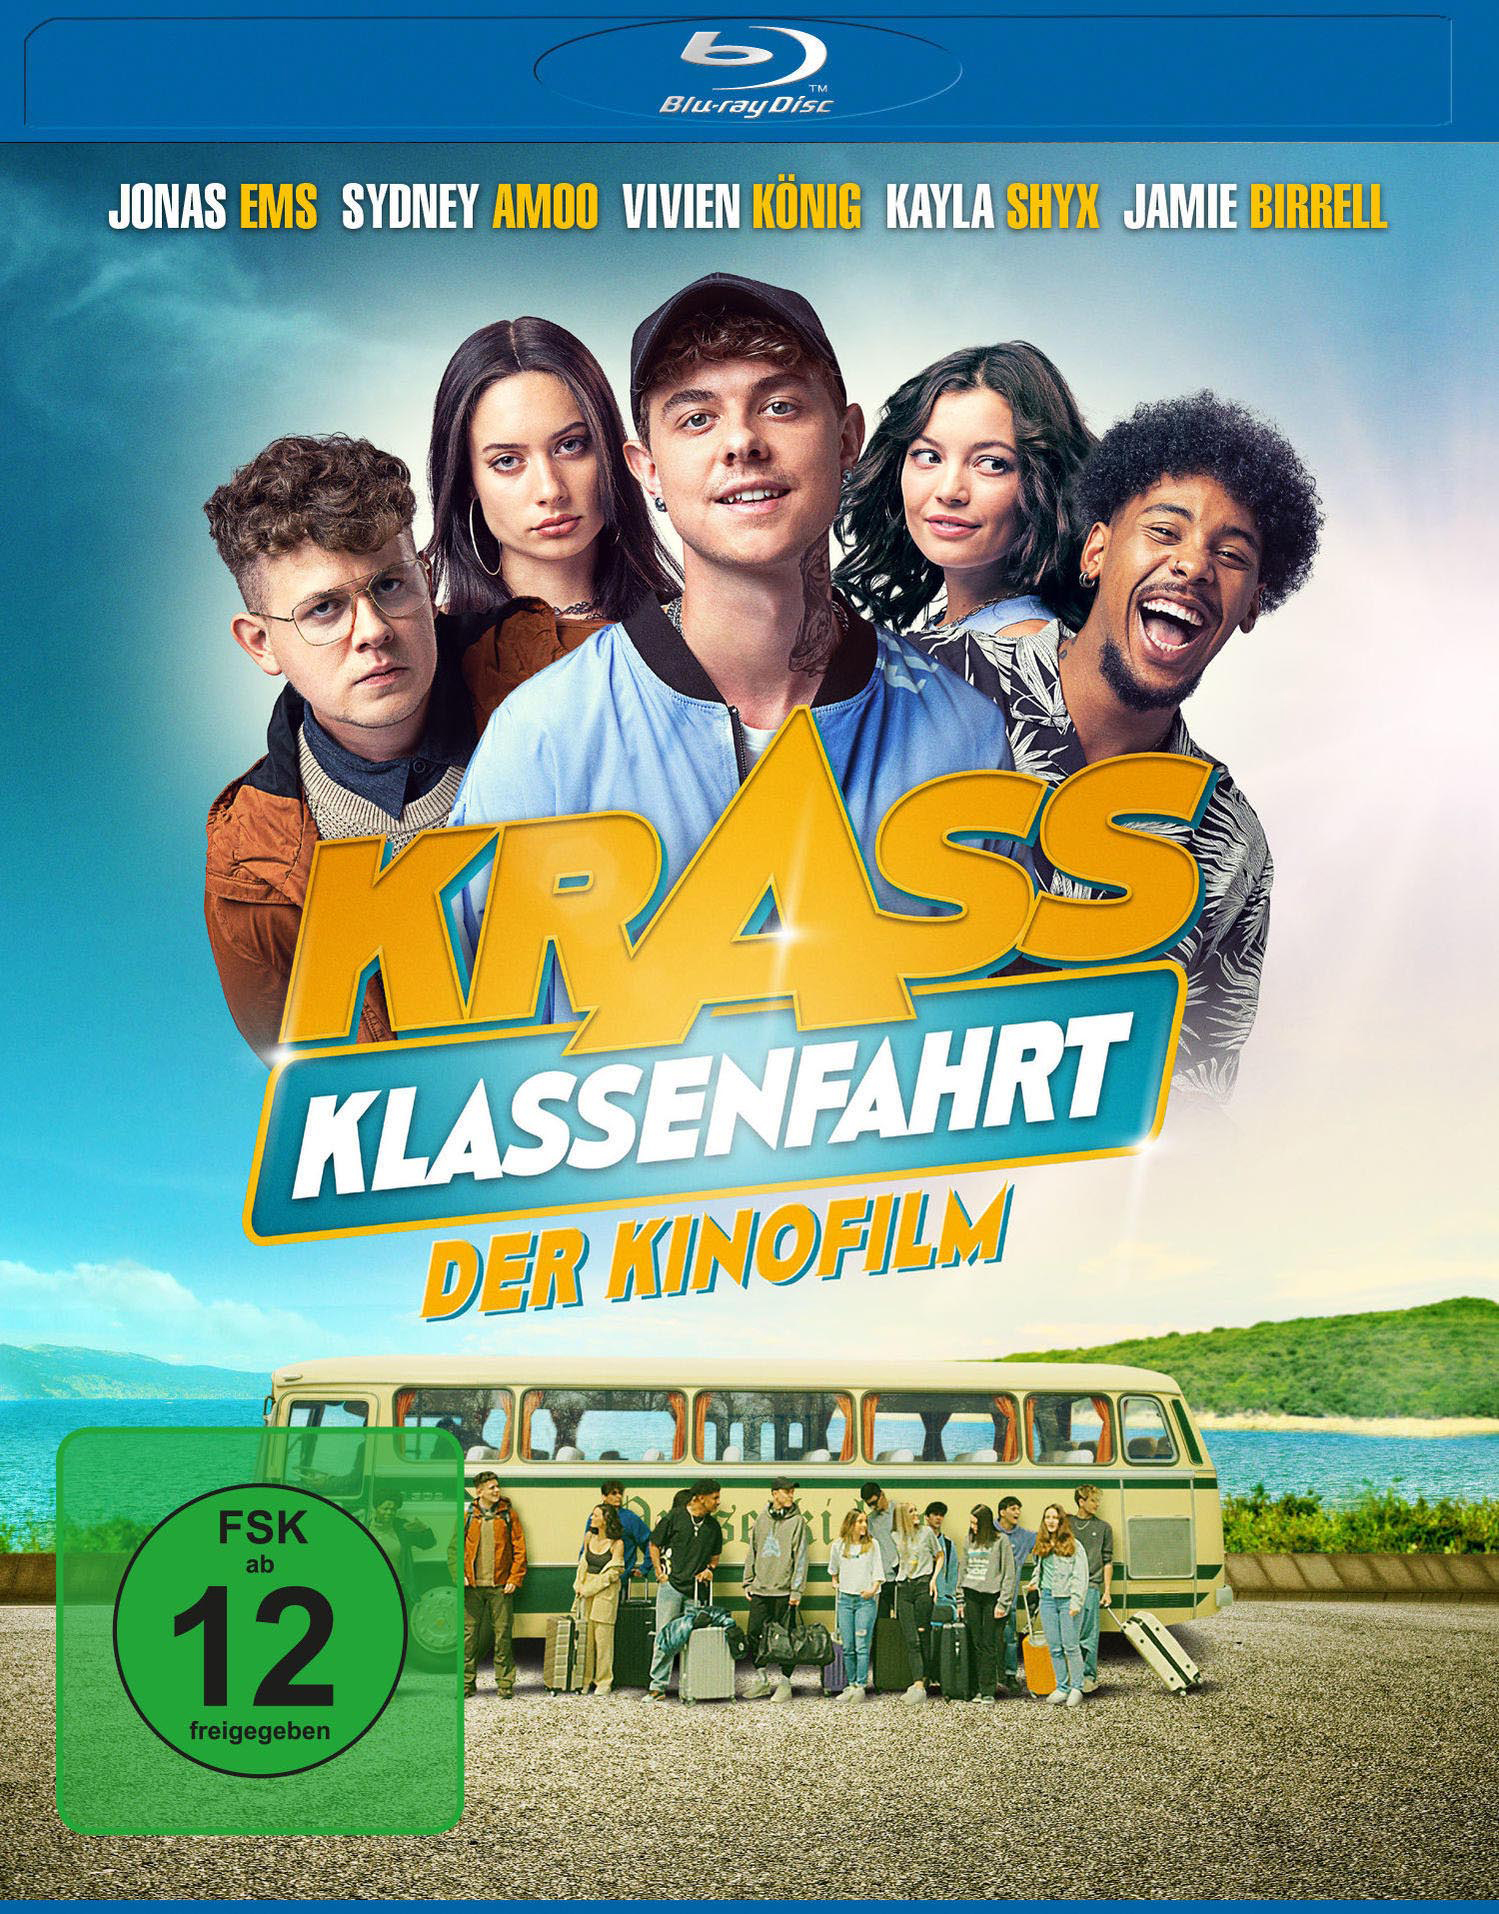 - Krass Blu-ray Kinofilm Der Klassenfahrt